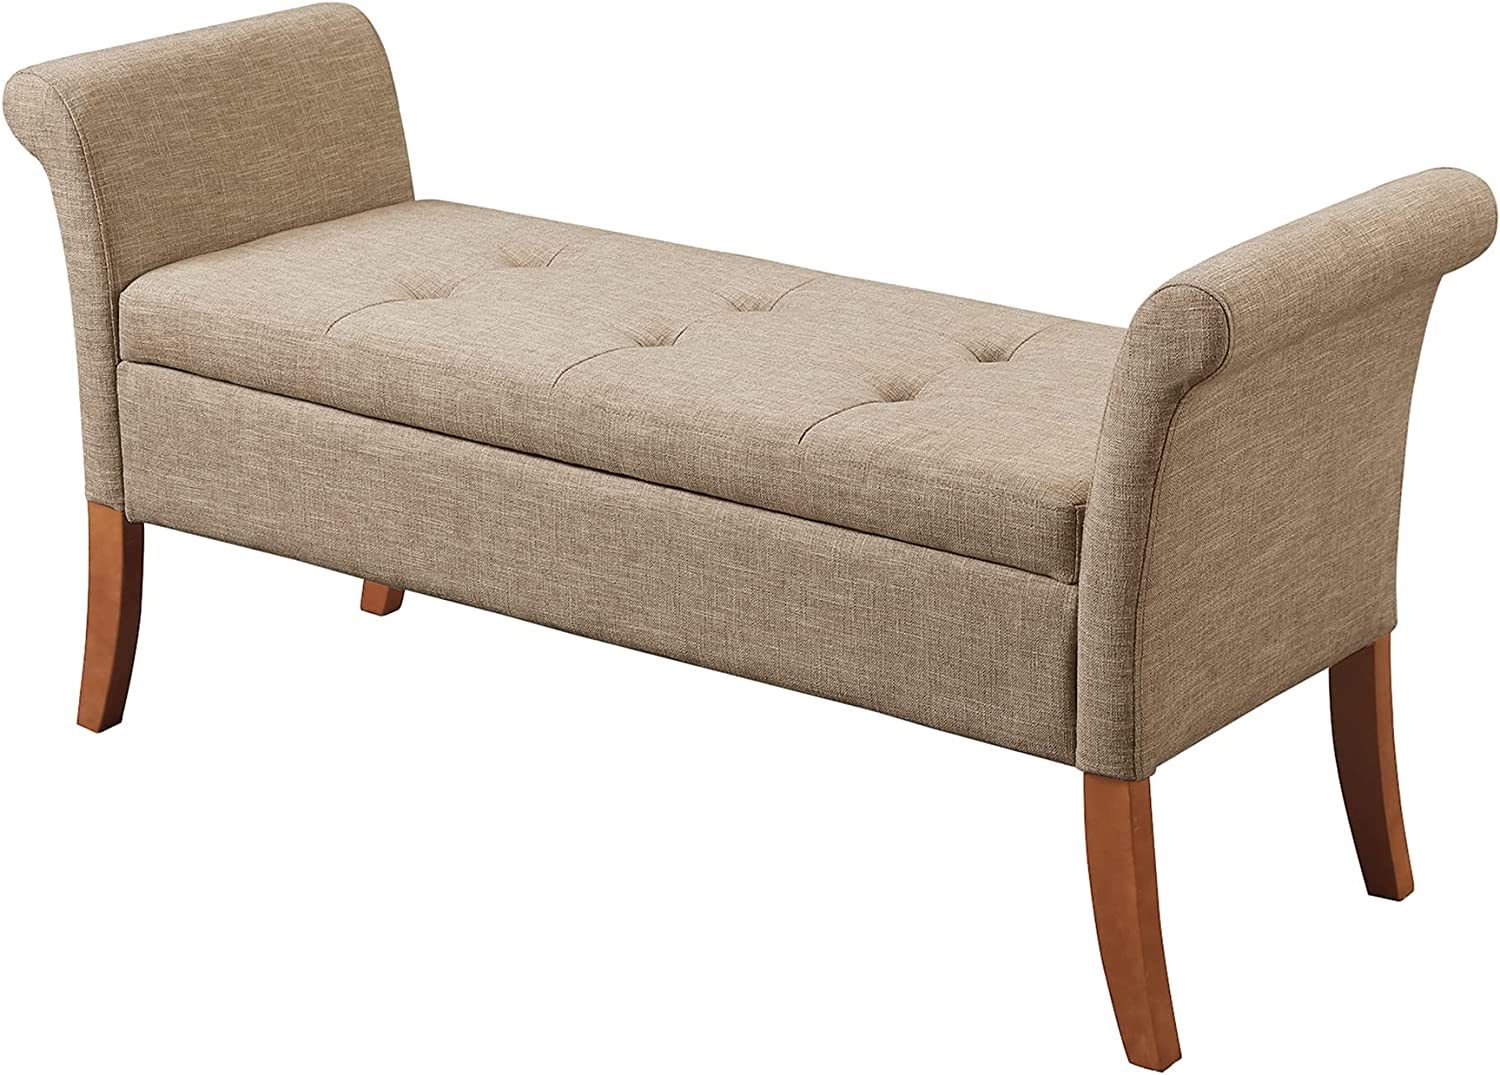 Convenience Concepts Designs4Comfort Garbo Storage Bench, Tan Fabric - $185.99